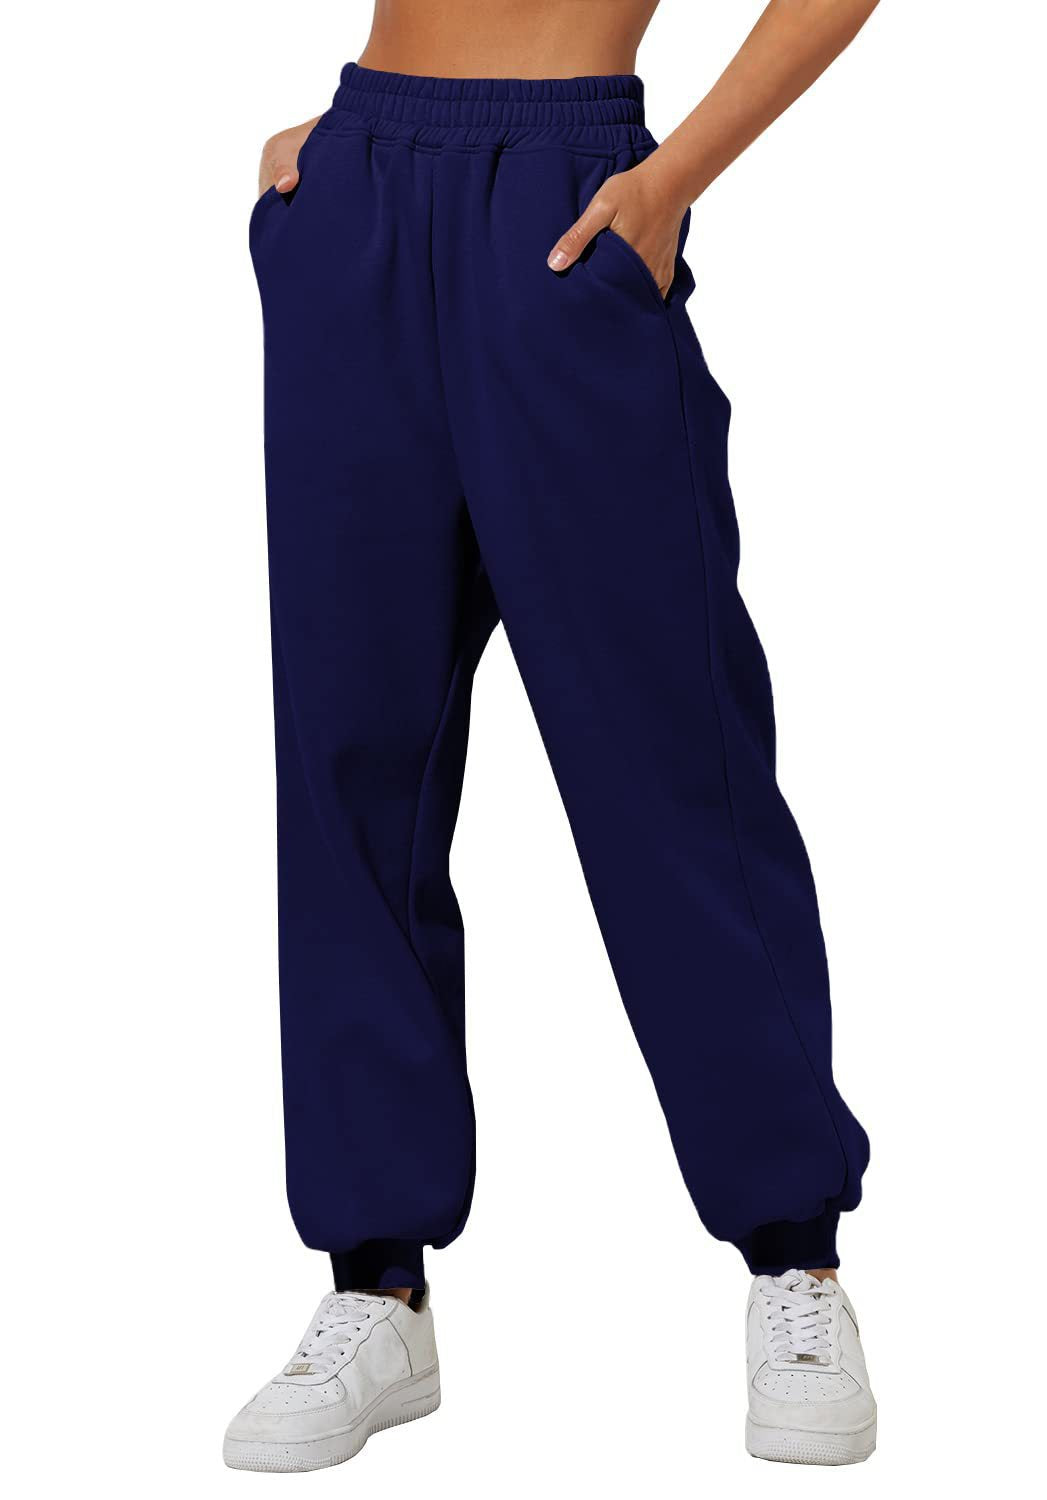 Women's Jogger Sweatpants - High-Waisted Drawstring Lounge Pants with Pockets - Navy Blue - Pants & Capris - Carvan Mart